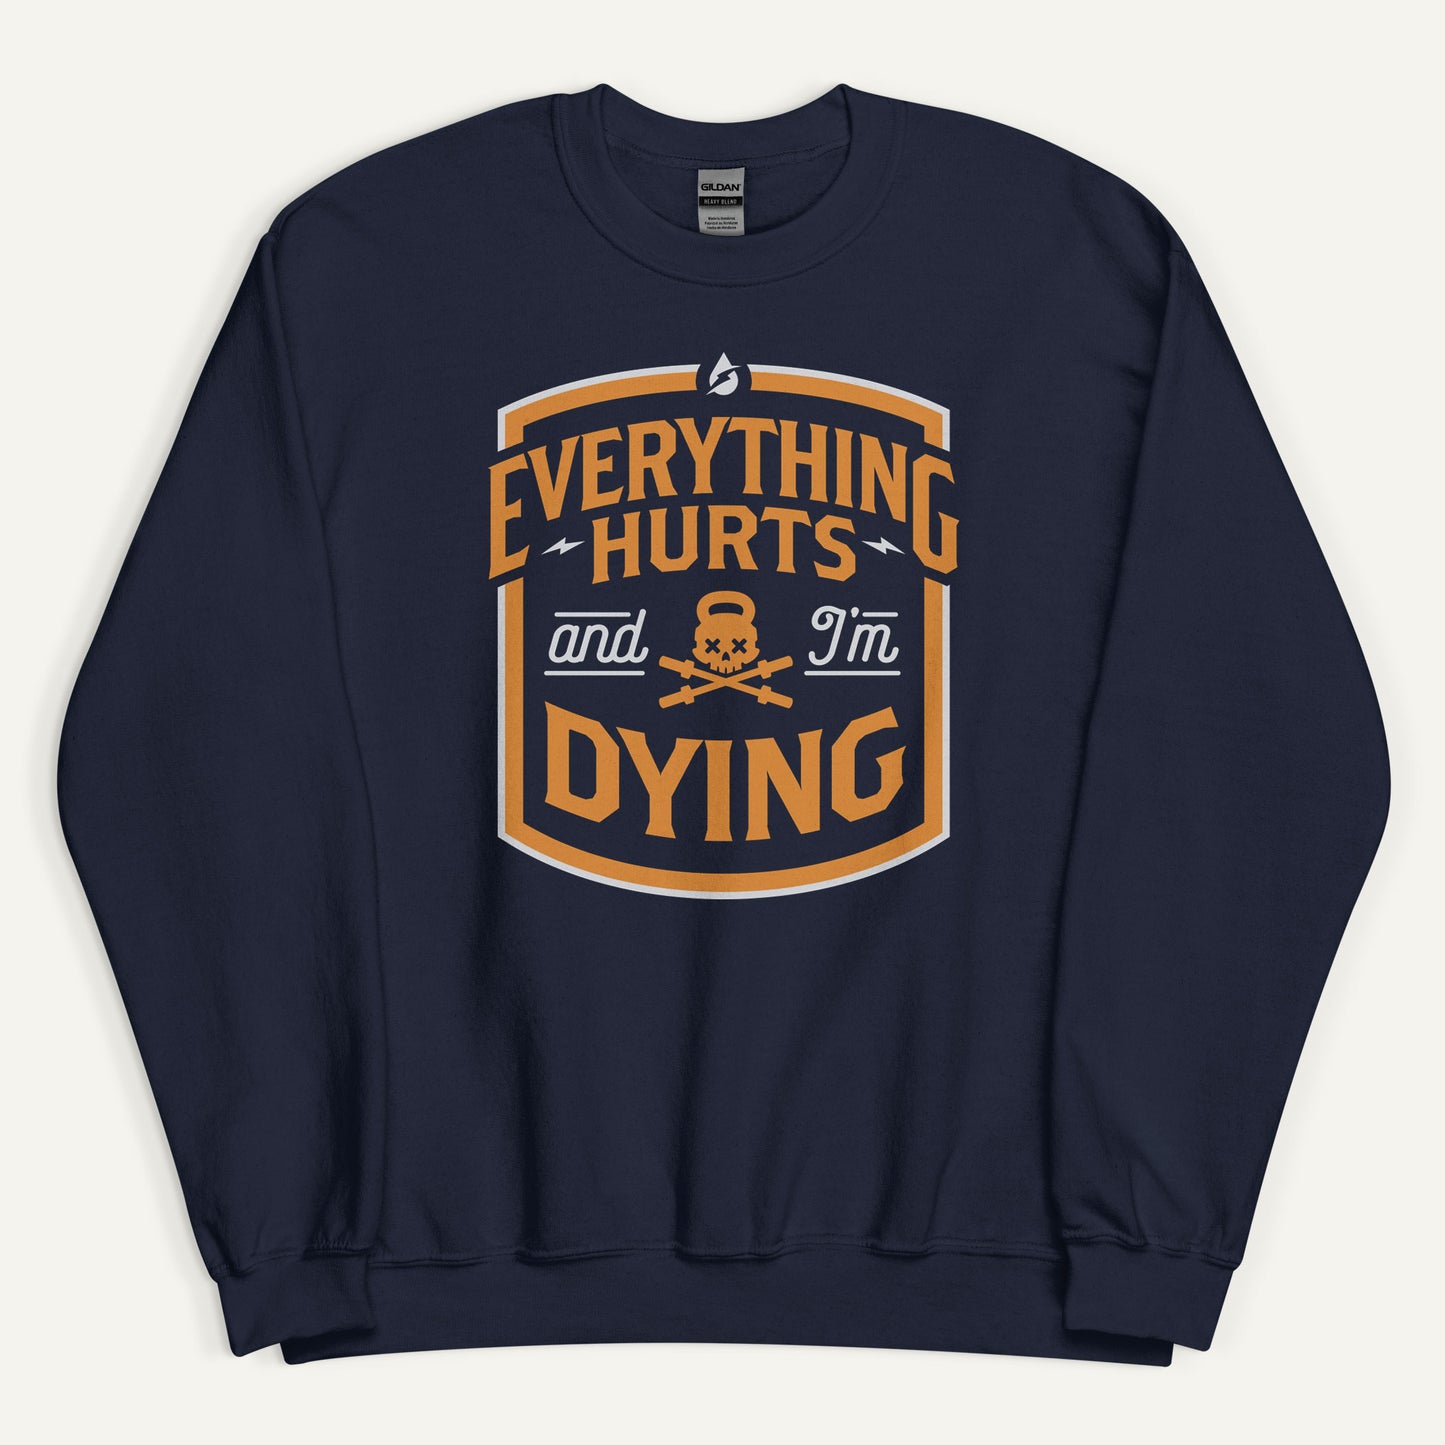 Everything Hurts And I'm Dying Sweatshirt